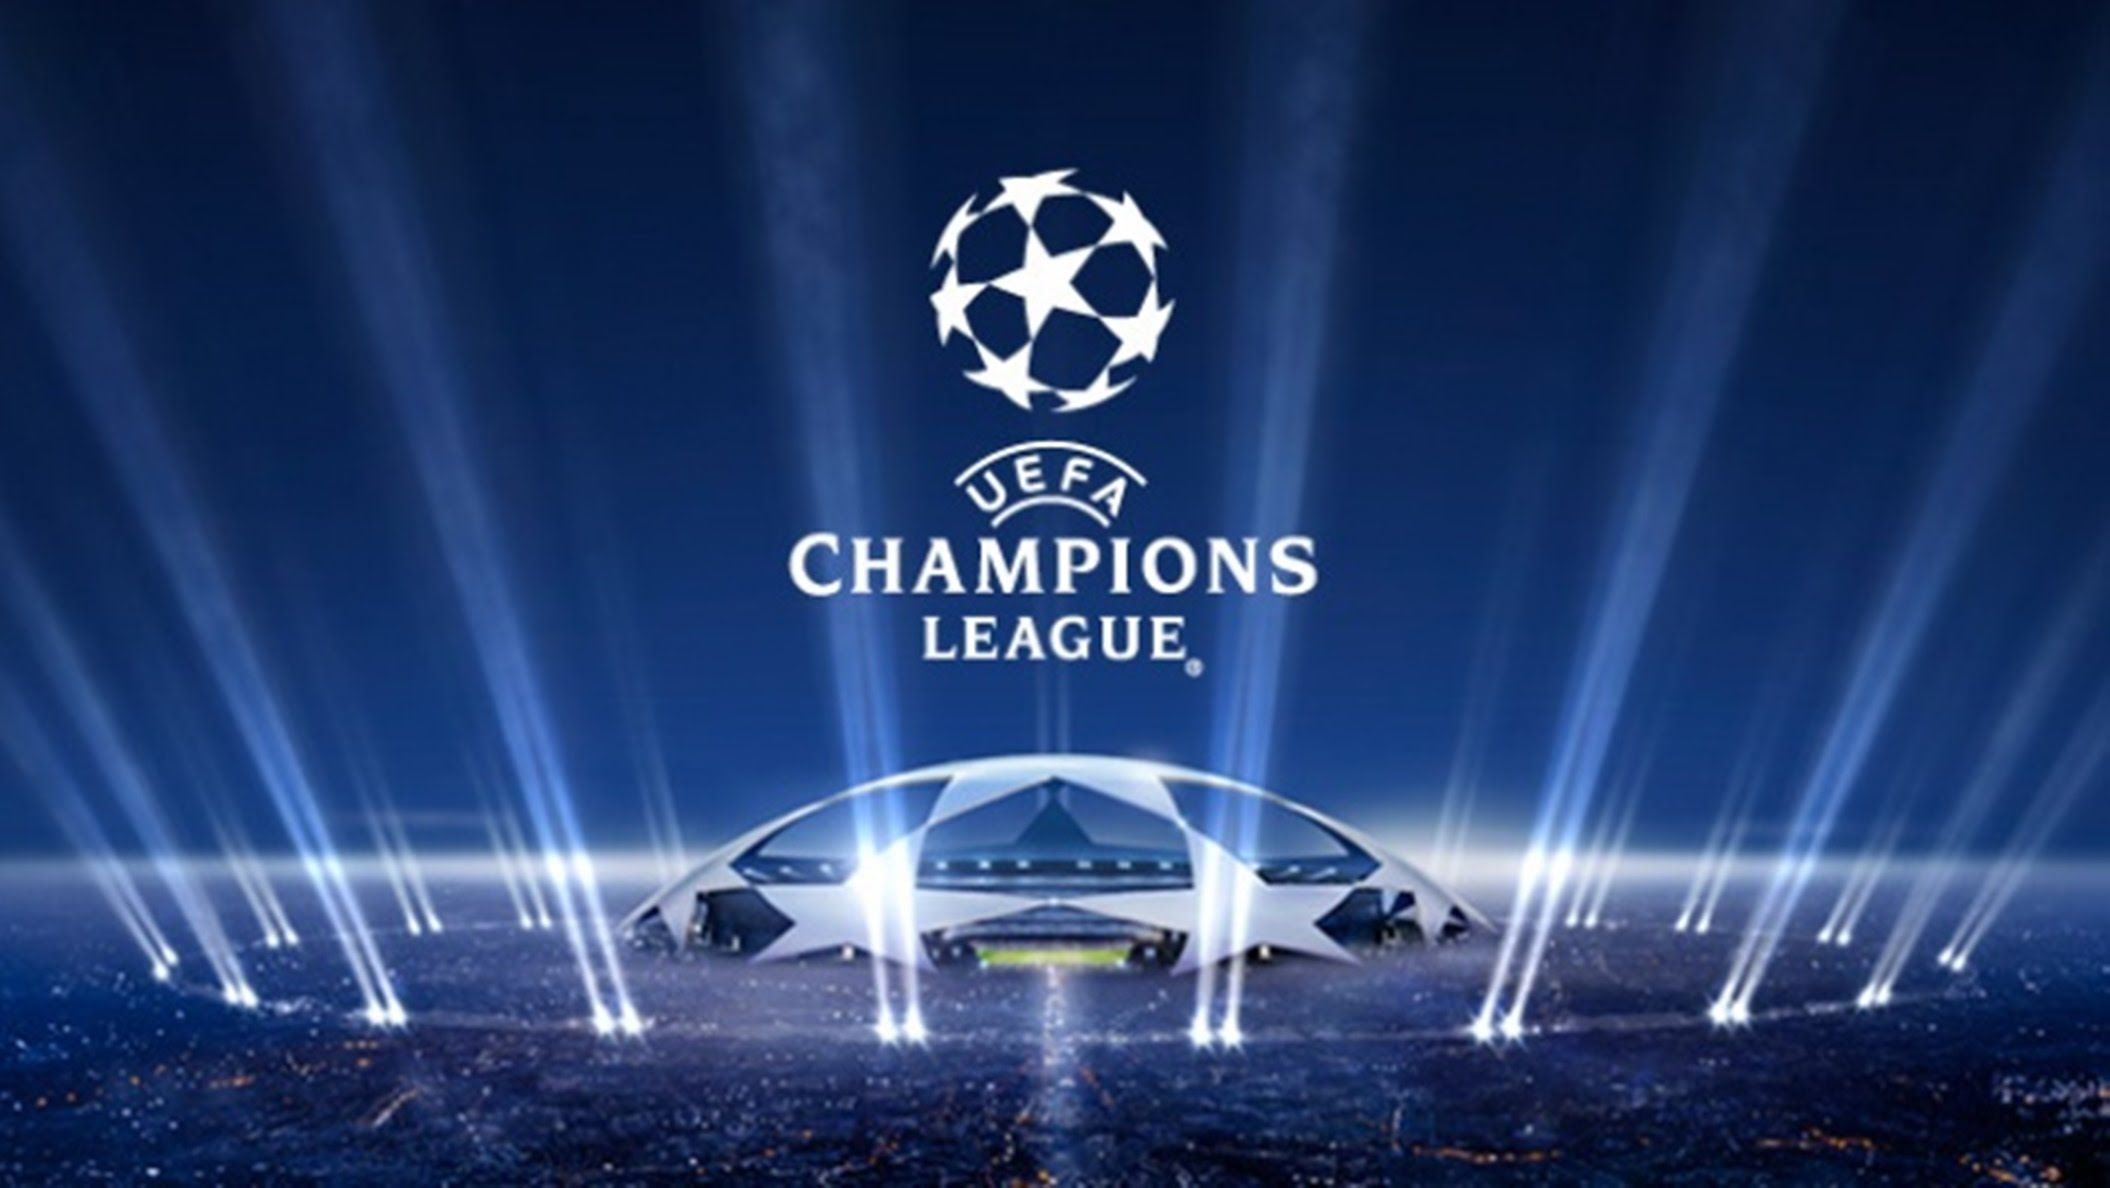 Jadwal Liga Champions Rabu-Kamis 16-17 Februari 2022, PSG vs Real Madrid  dan Inter Milan vs Liverpool - Zona Surabaya Raya